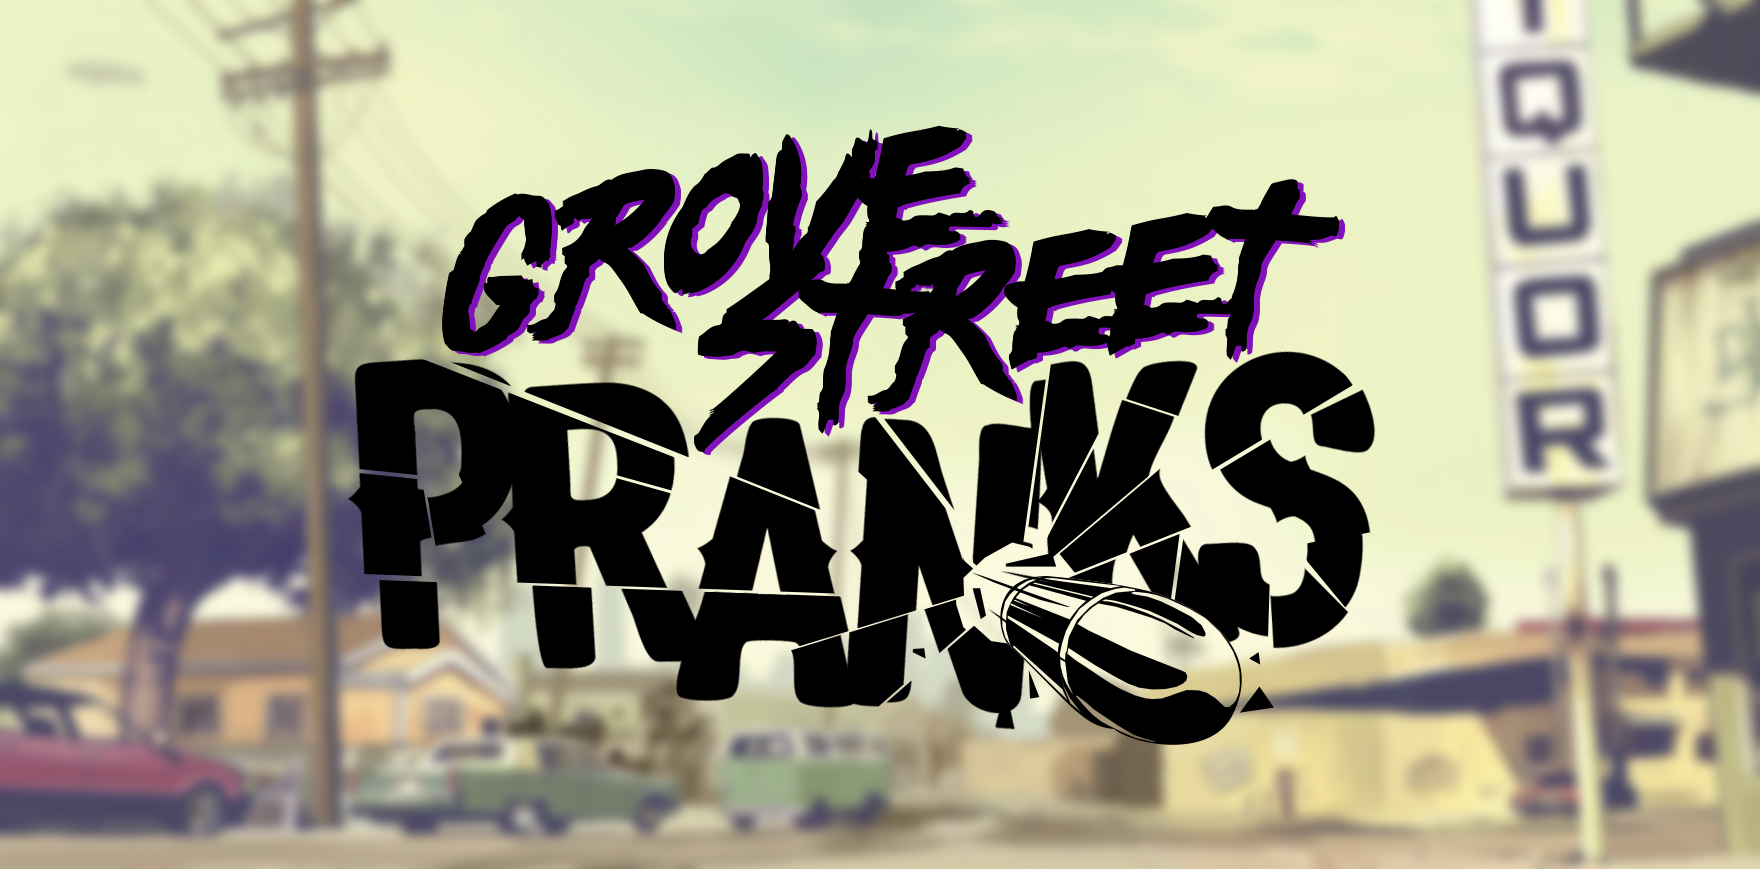 Grove-Street-Pranks-logo